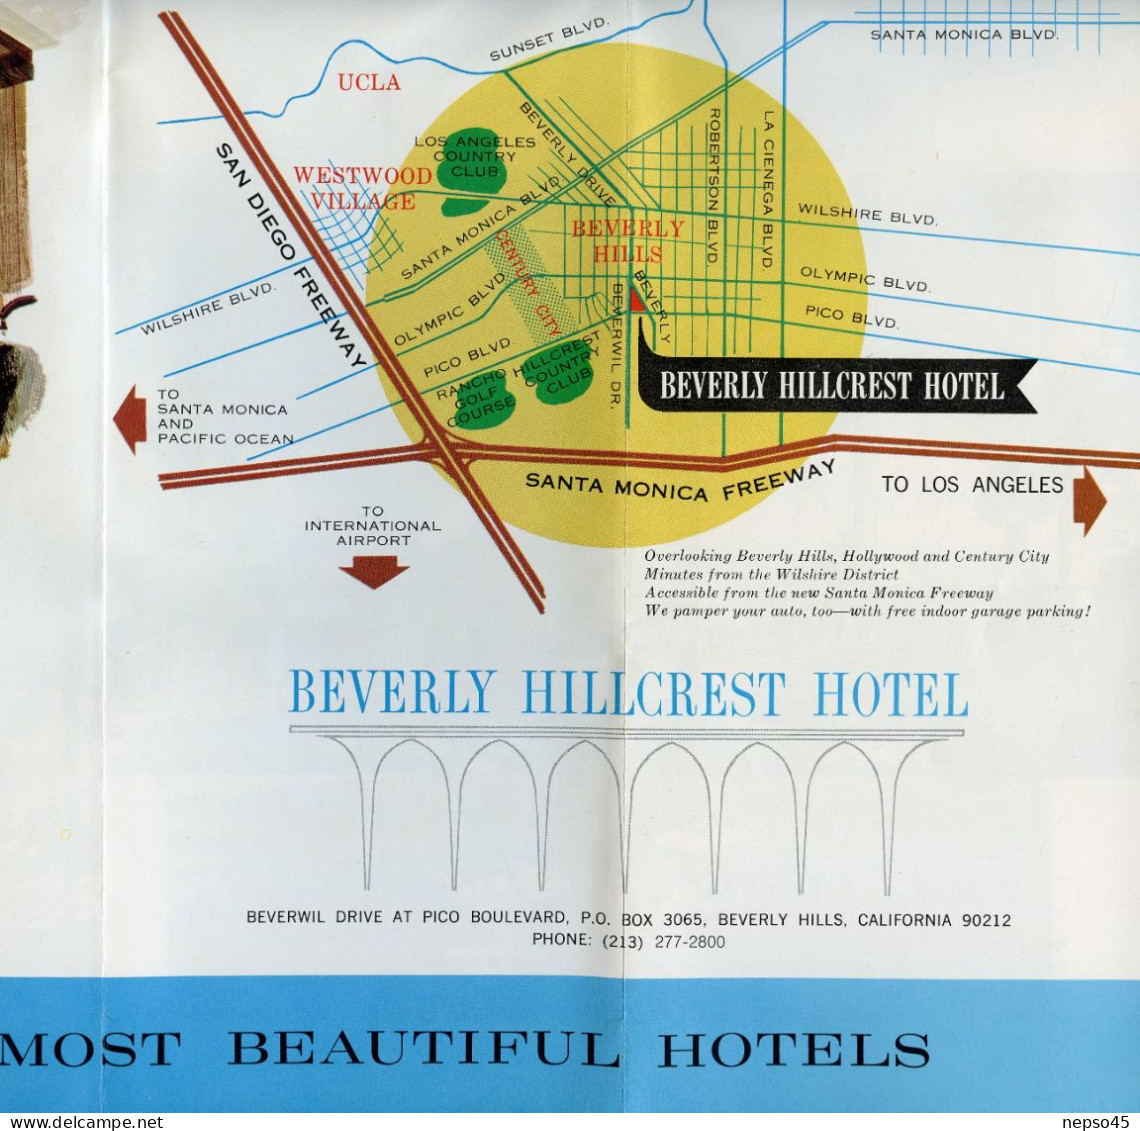 Dépliant touristique.Amérique.U.S.A.Beverly Hills California.One of America's Most Beautiful Hotel.